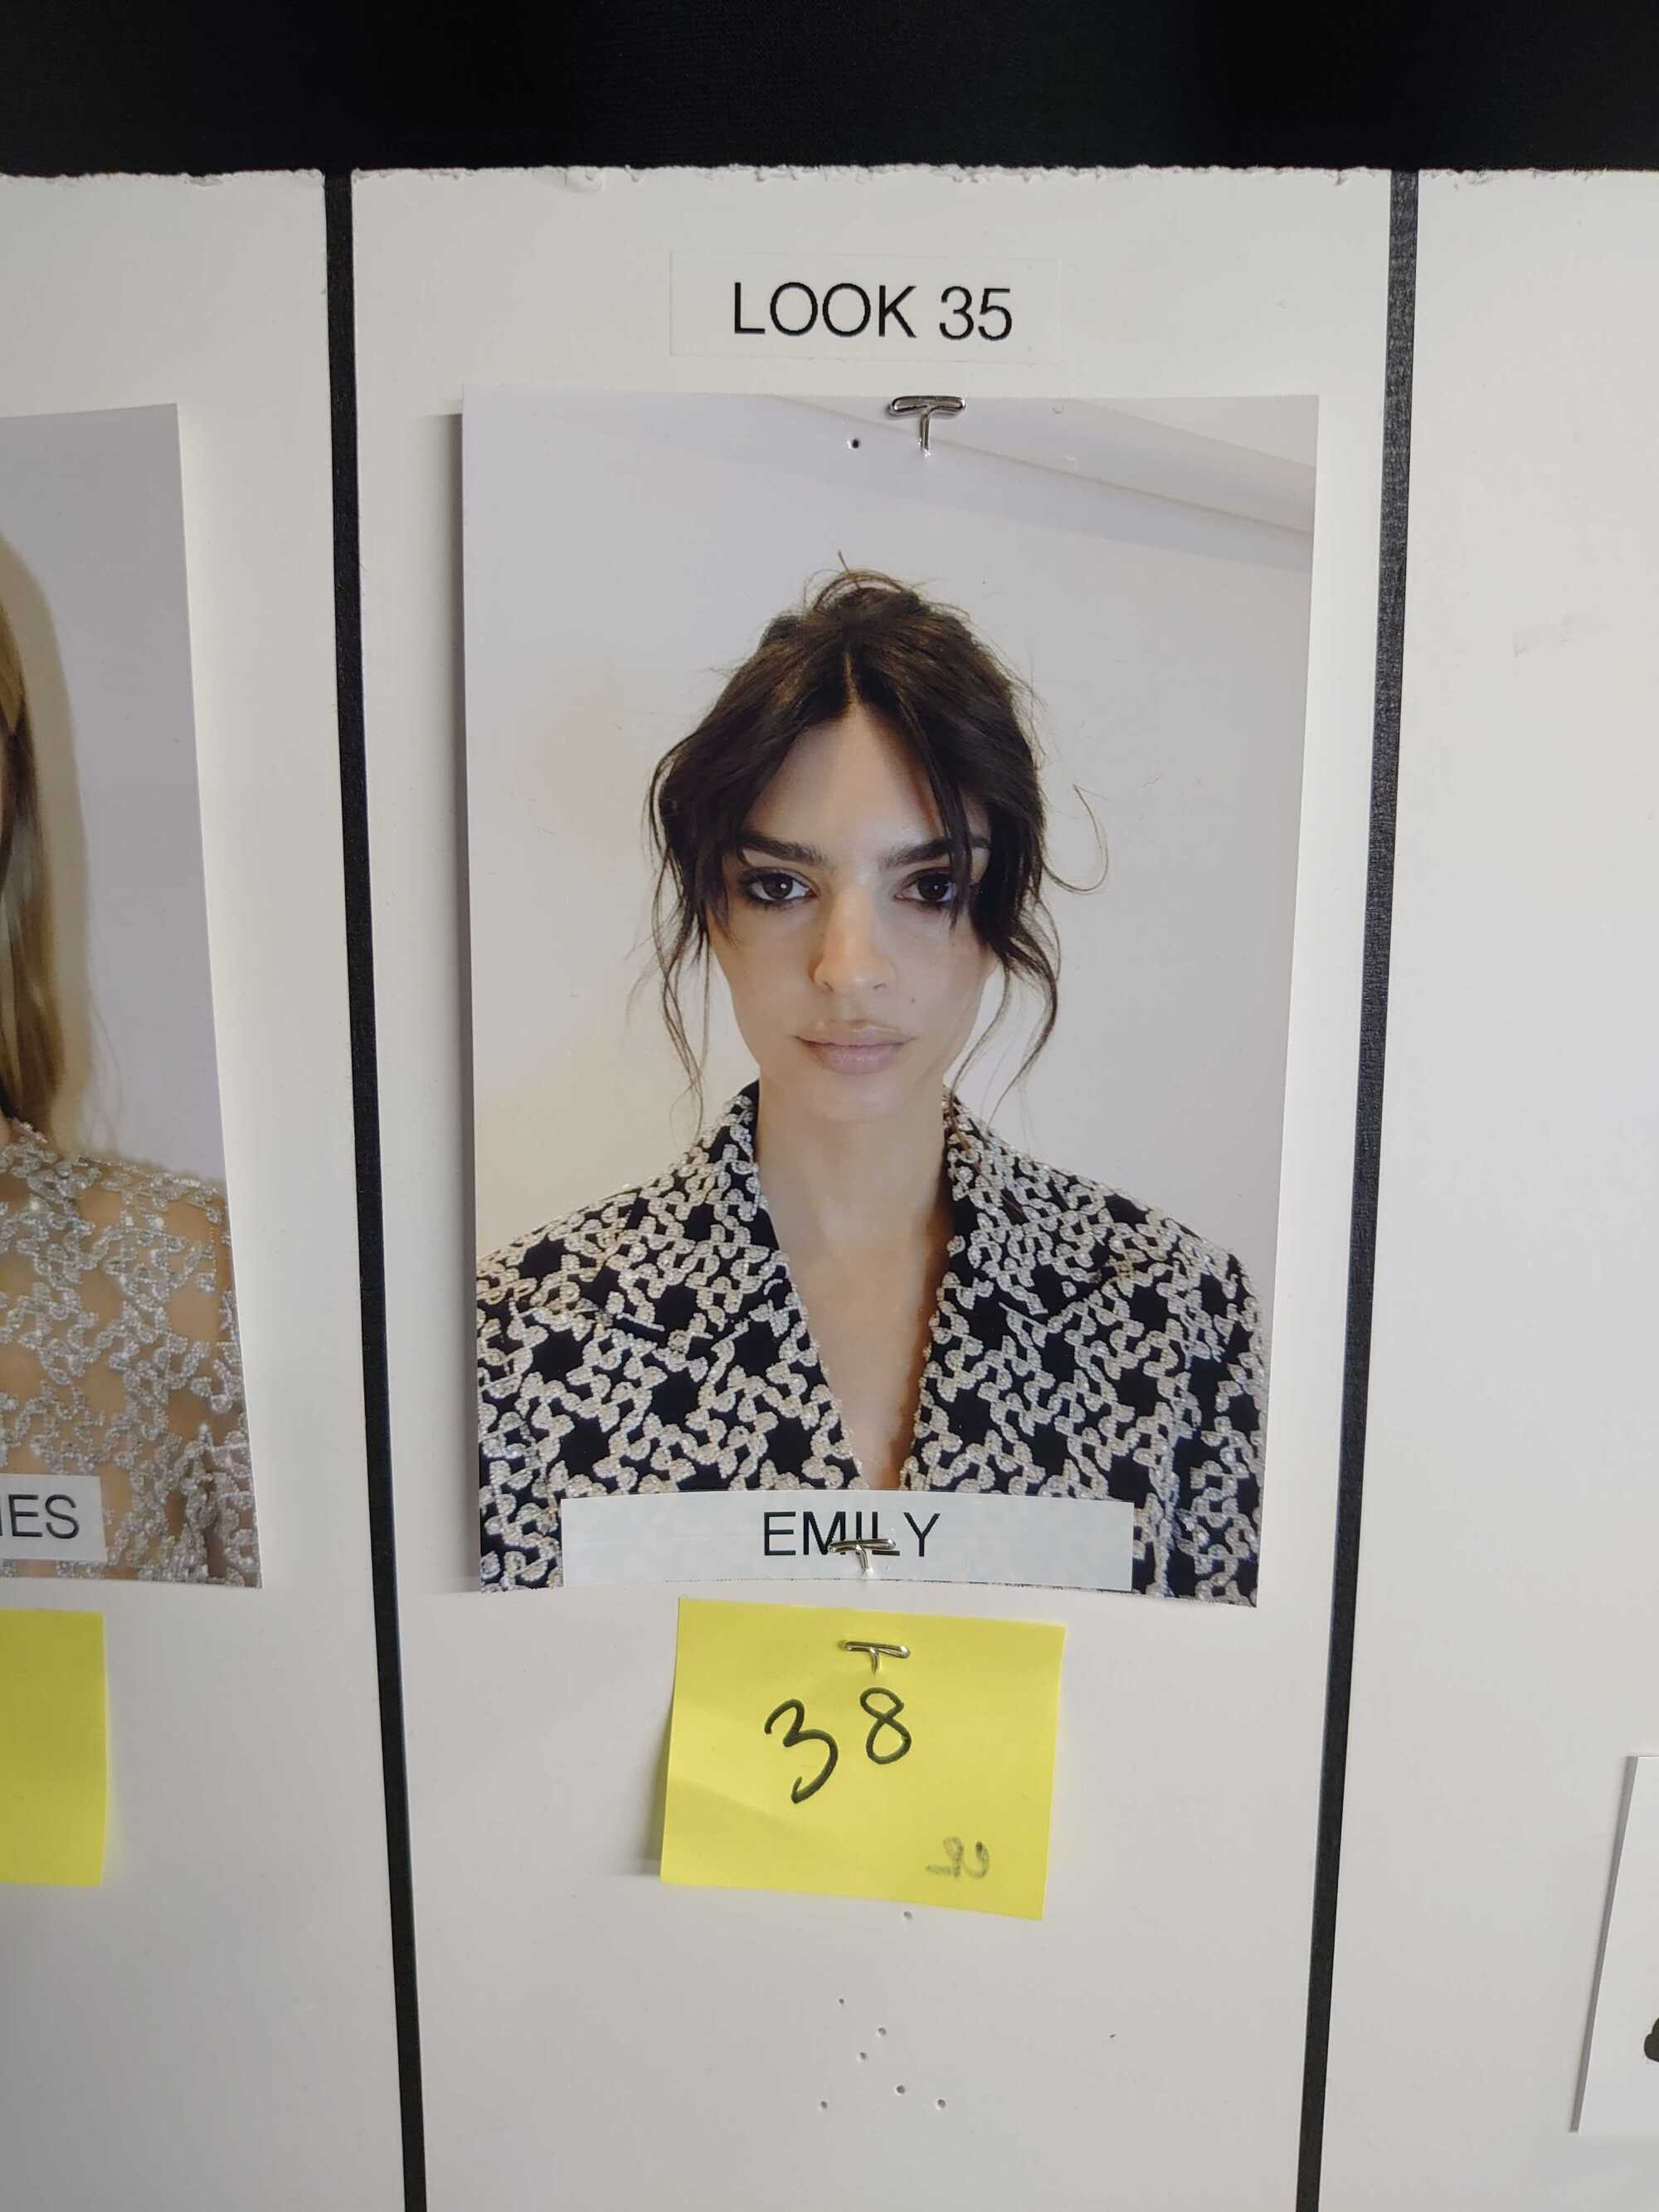 A Polaroid style headshot photo of Emily Ratajkowski on a modeling board